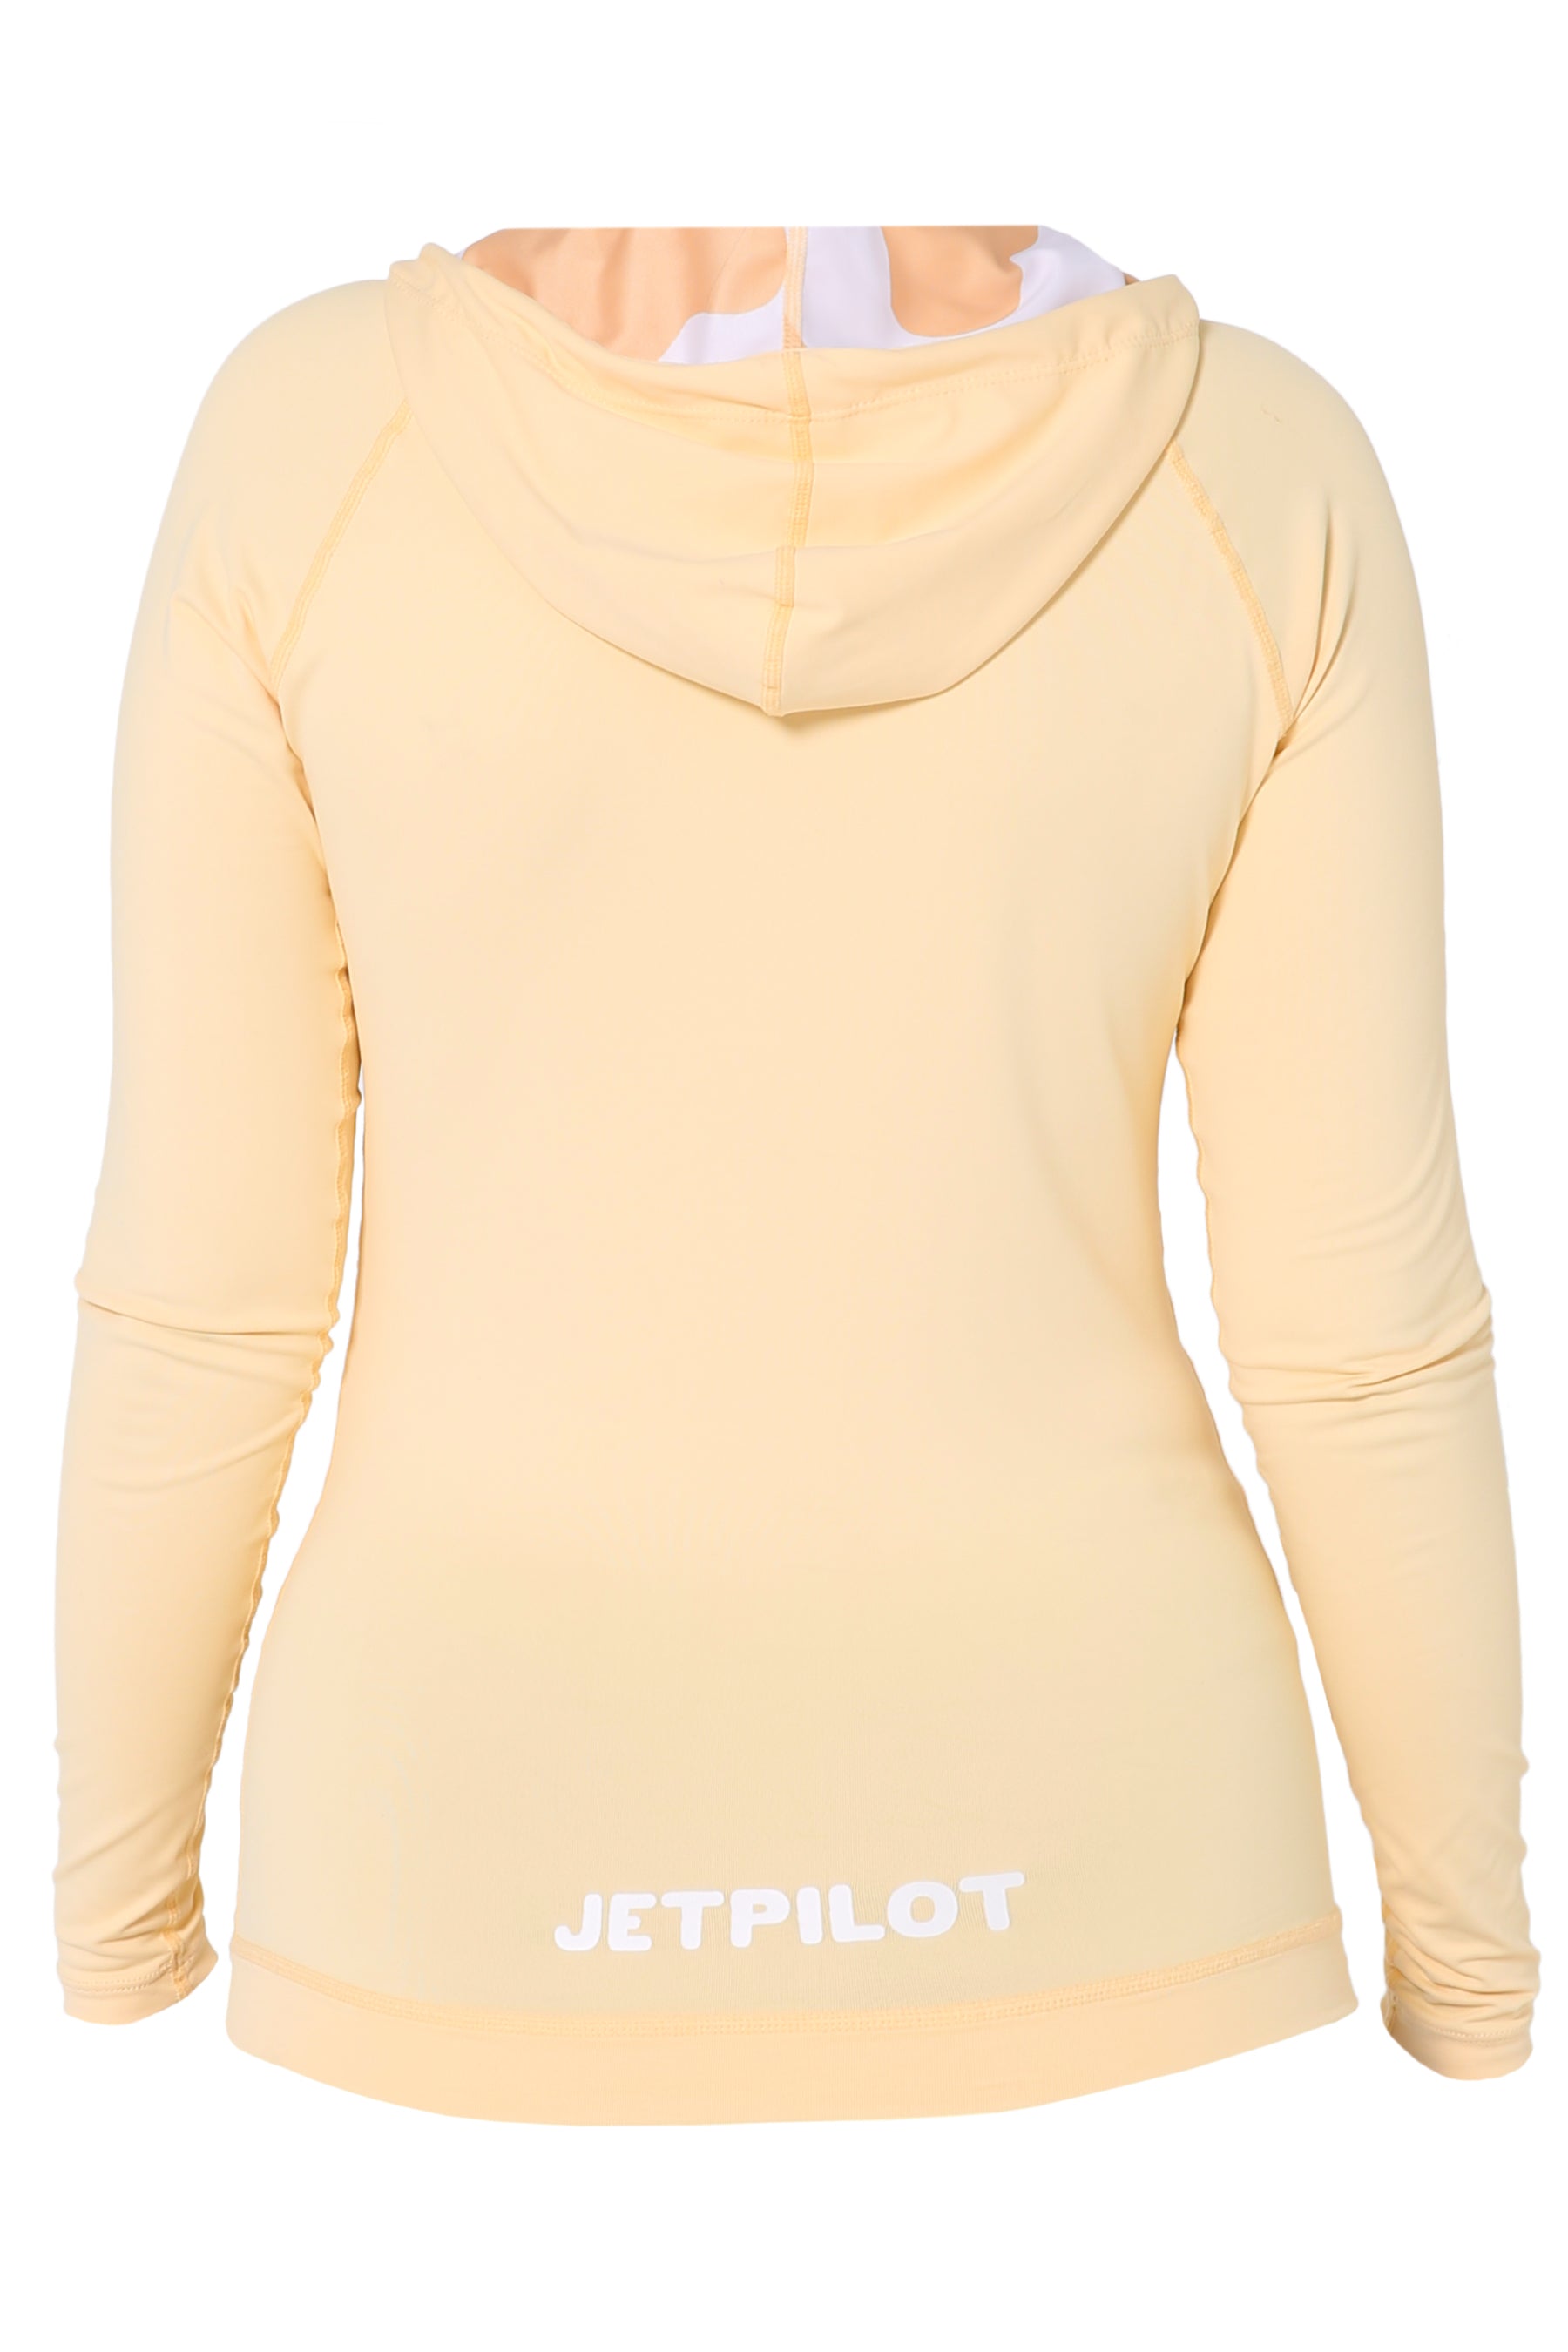 Jetpilot Zahra Ls Hooded Ladies Rashie - Yellow 3